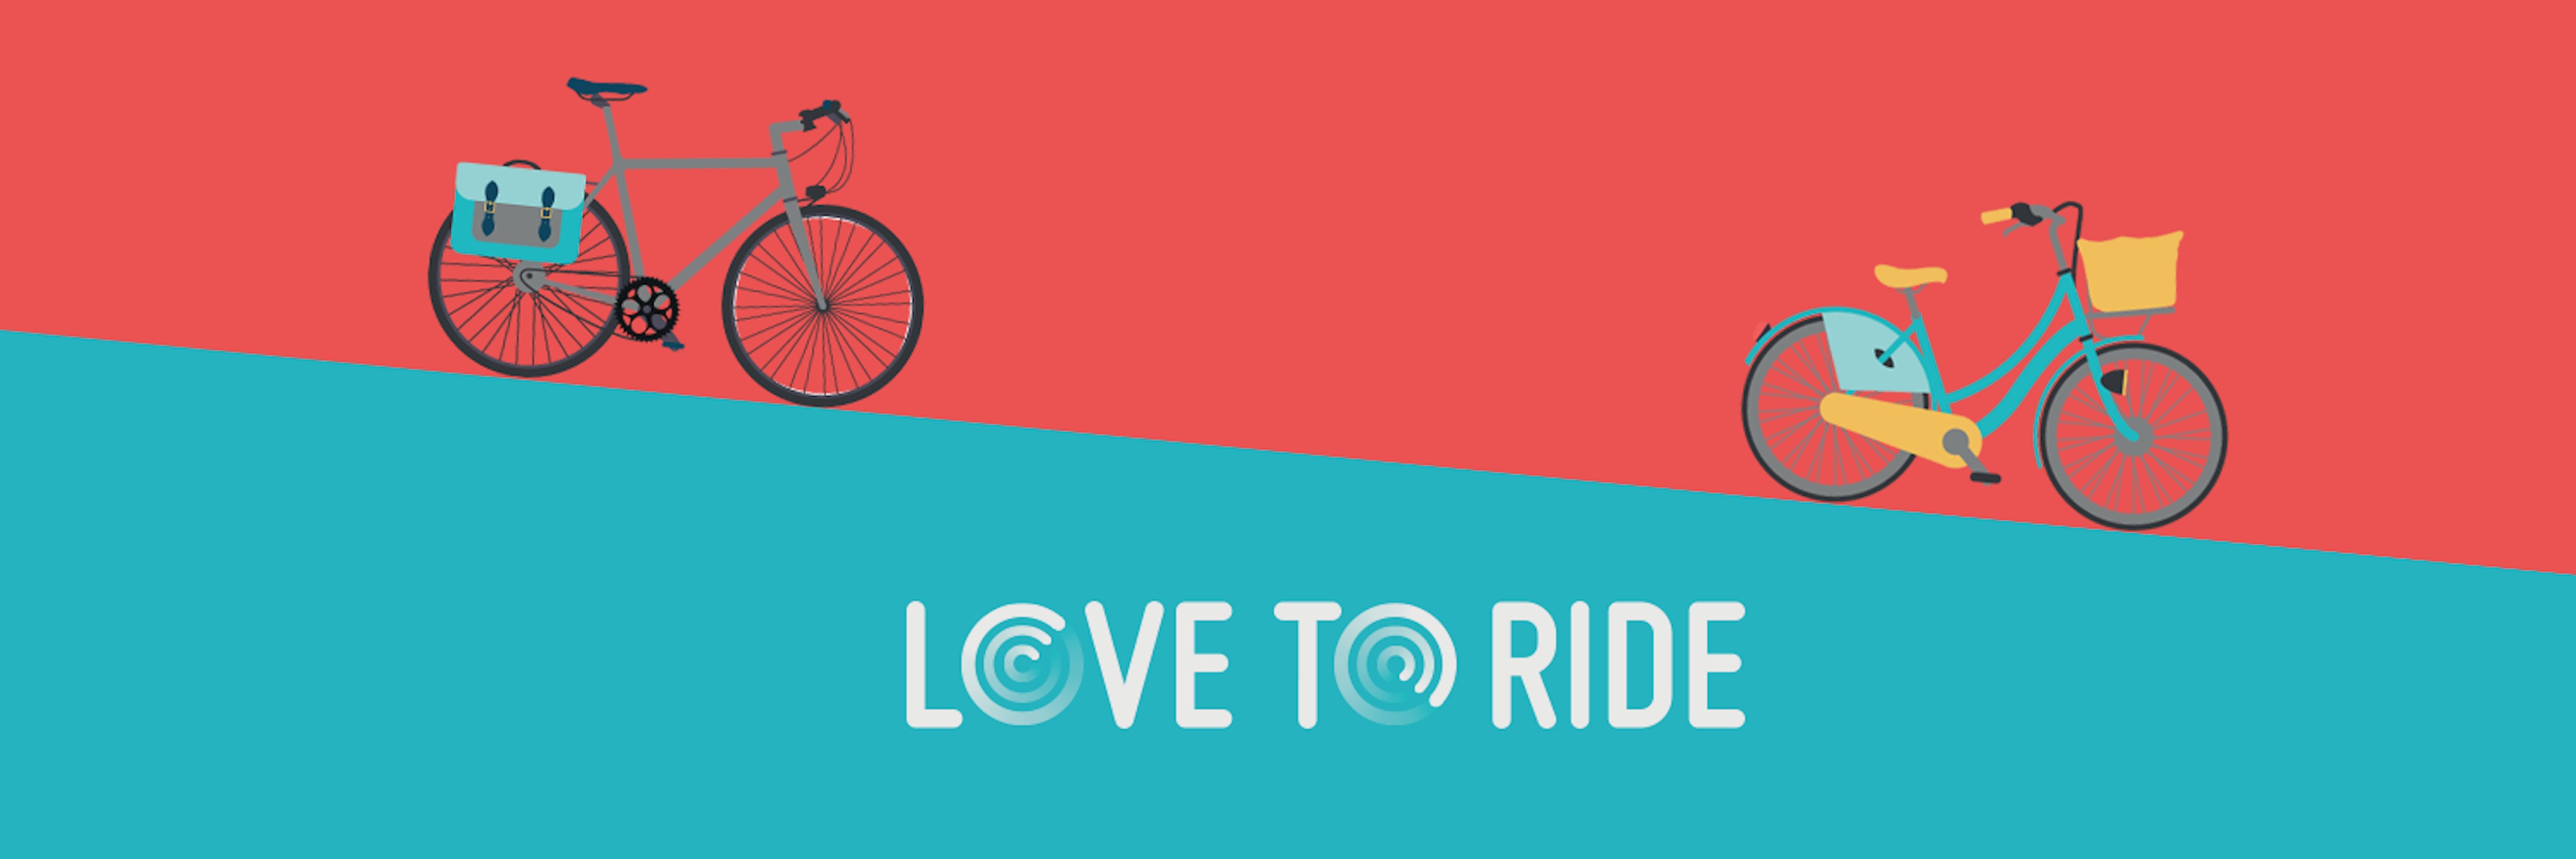 Episode 8: Love to Ride Tucson